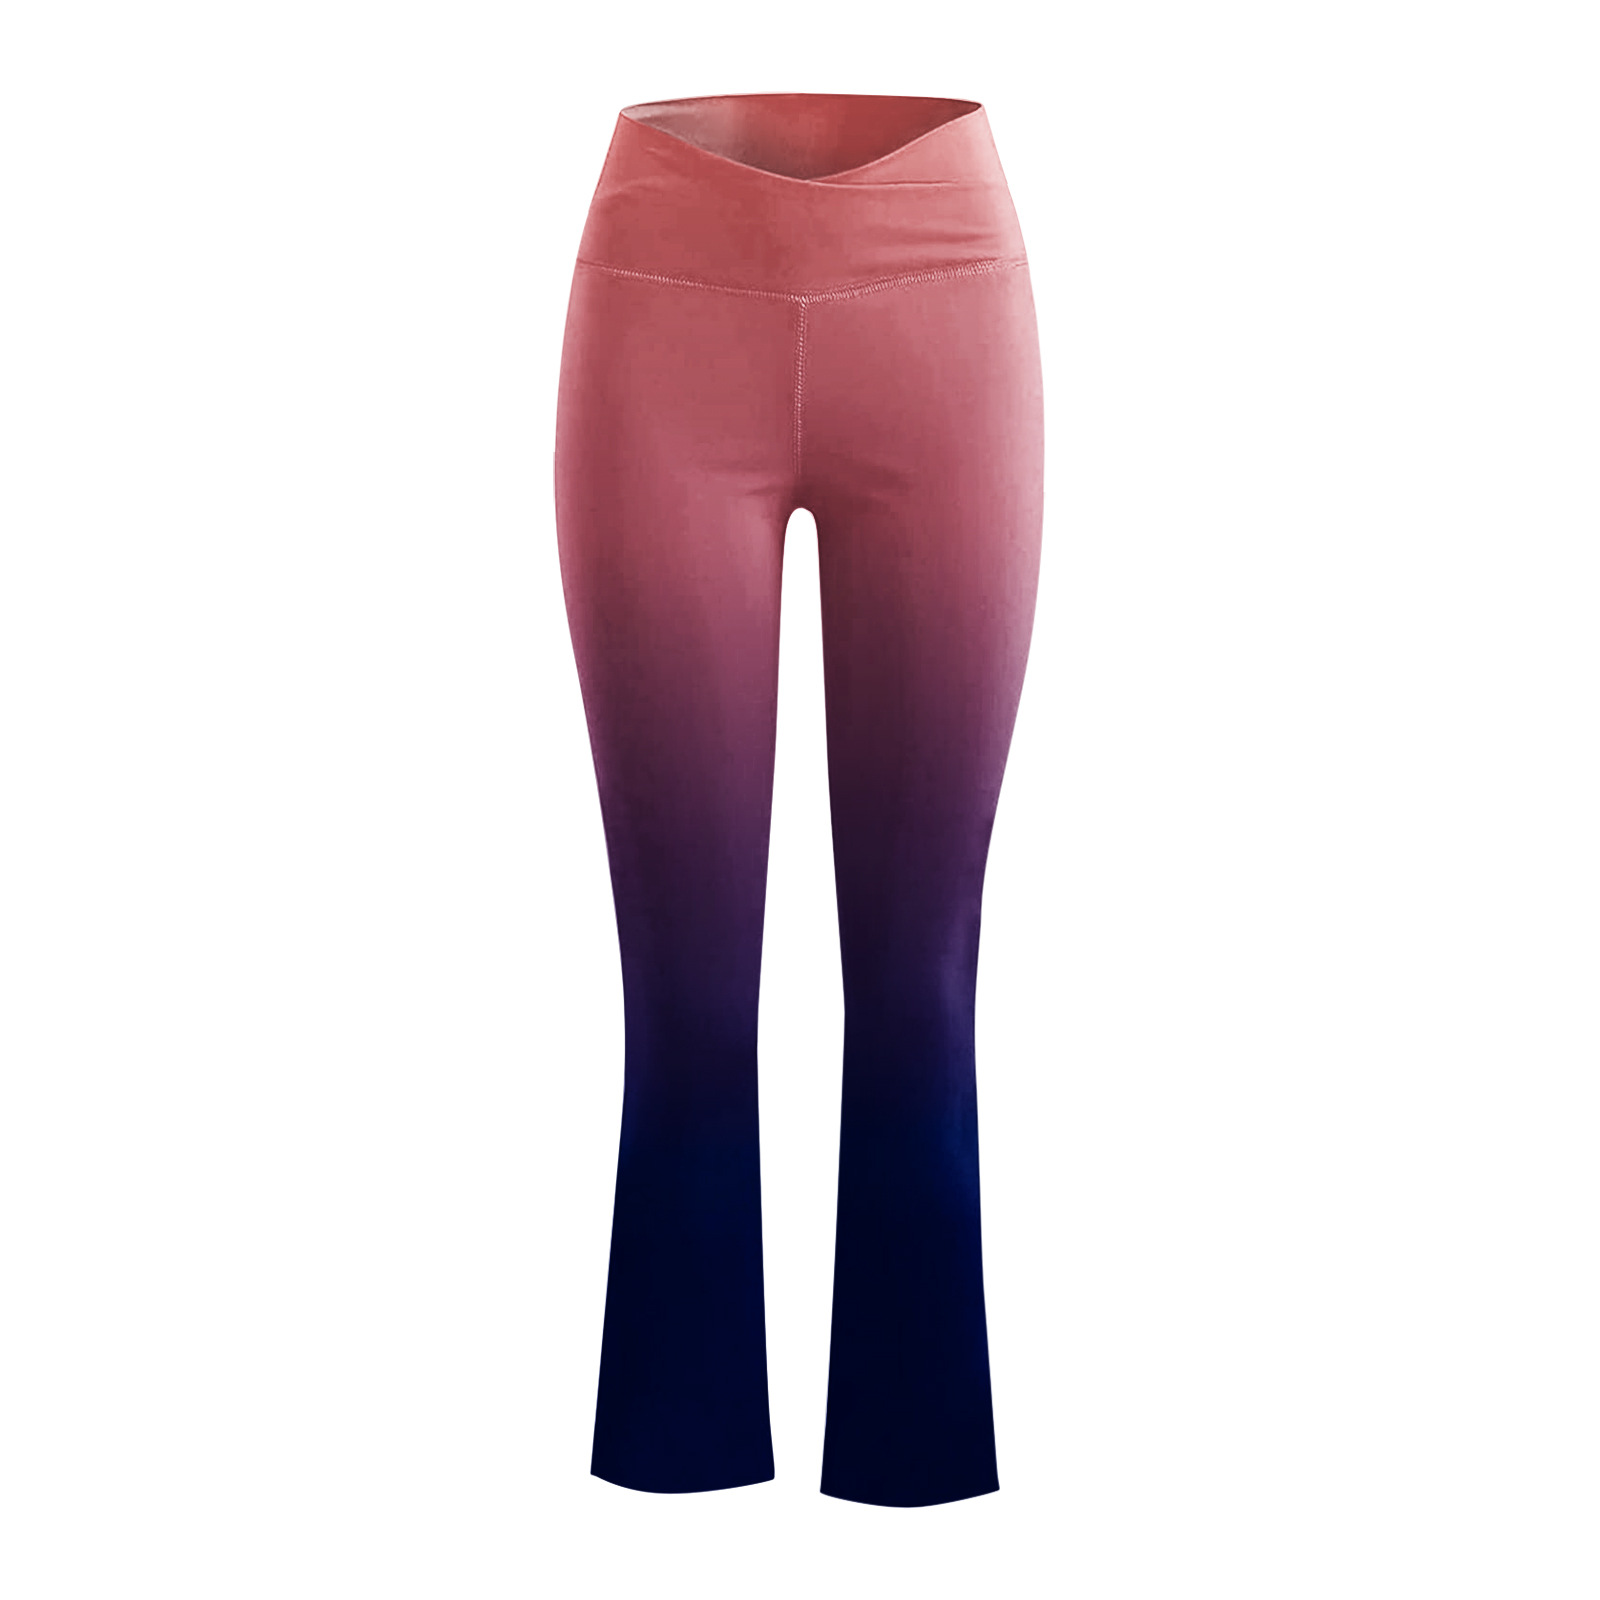 Pantalones de yoga Tie Dye Flare Super Factory |ZHIHUI